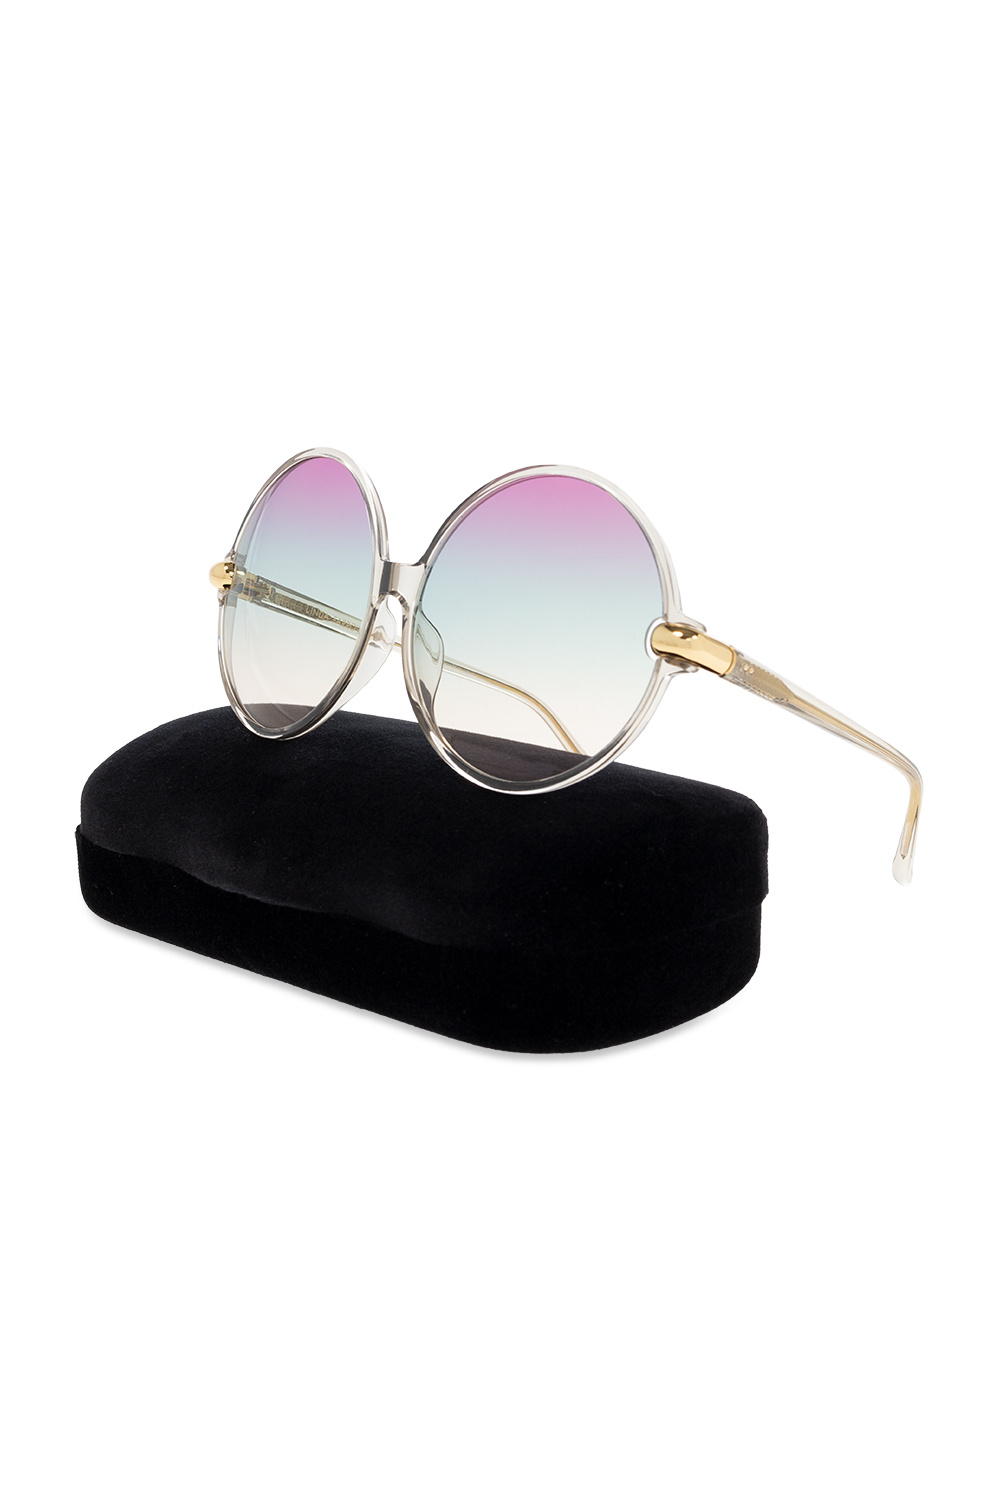 Linda Farrow ‘Victoria’ sunglasses